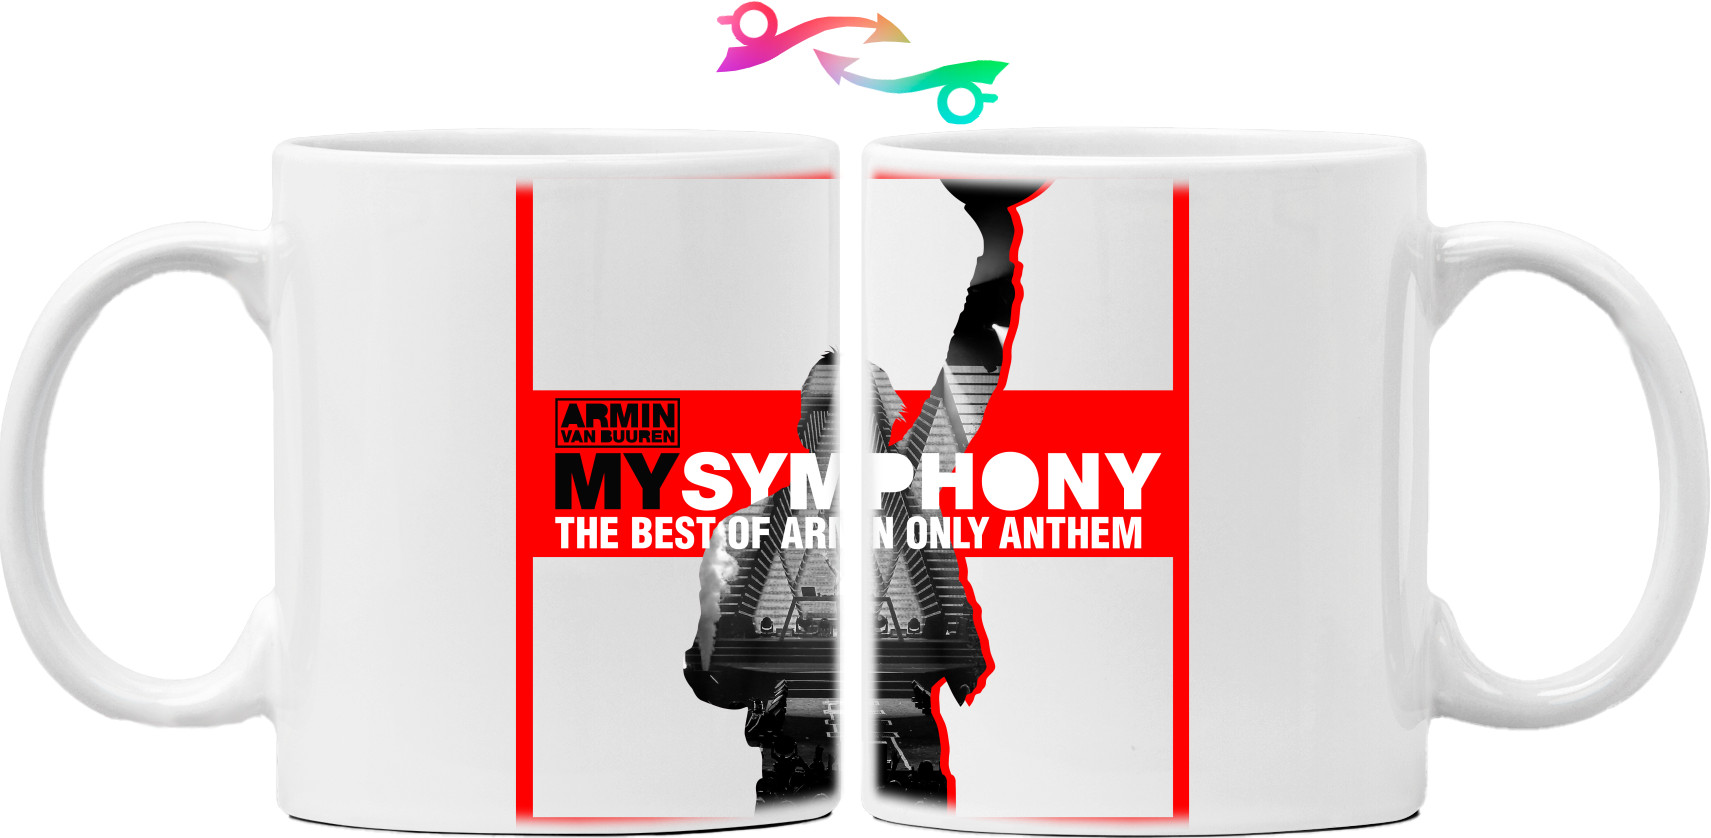 My symphony Armin van Buuren